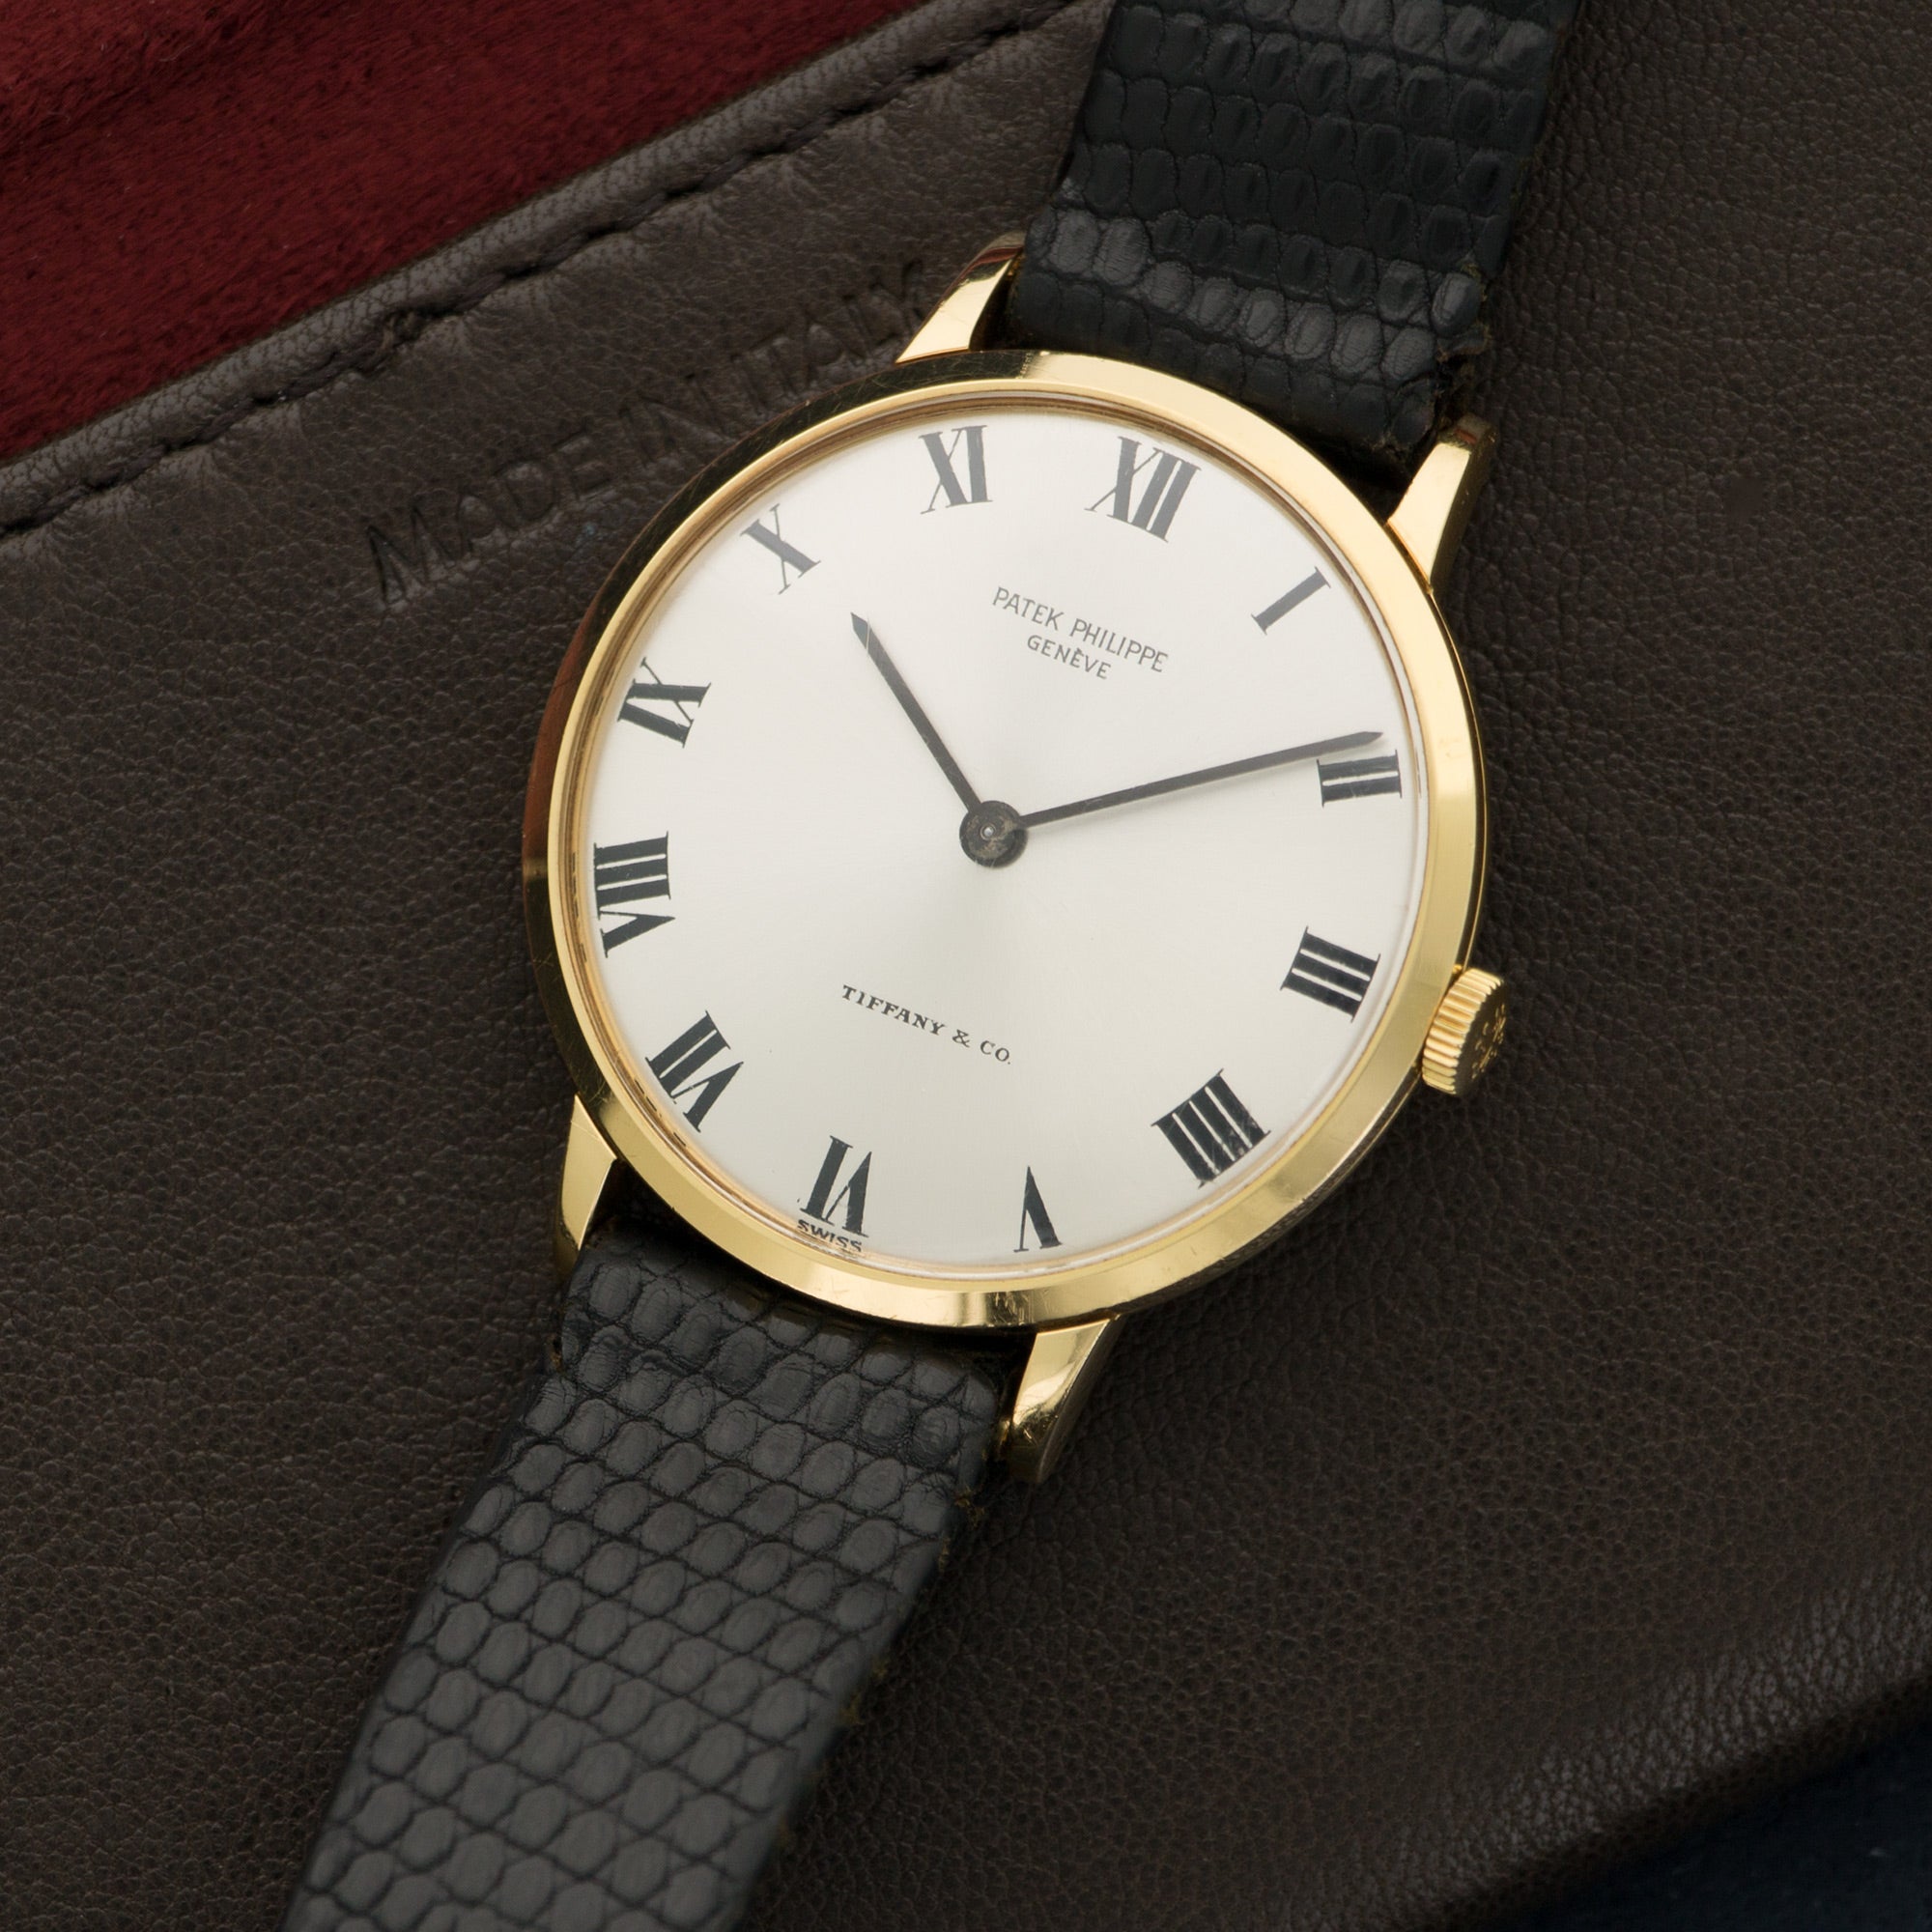 Patek Philippe - Patek Philippe Yellow Gold Calatrava Tiffany & Co Watch Ref. 3468 - The Keystone Watches